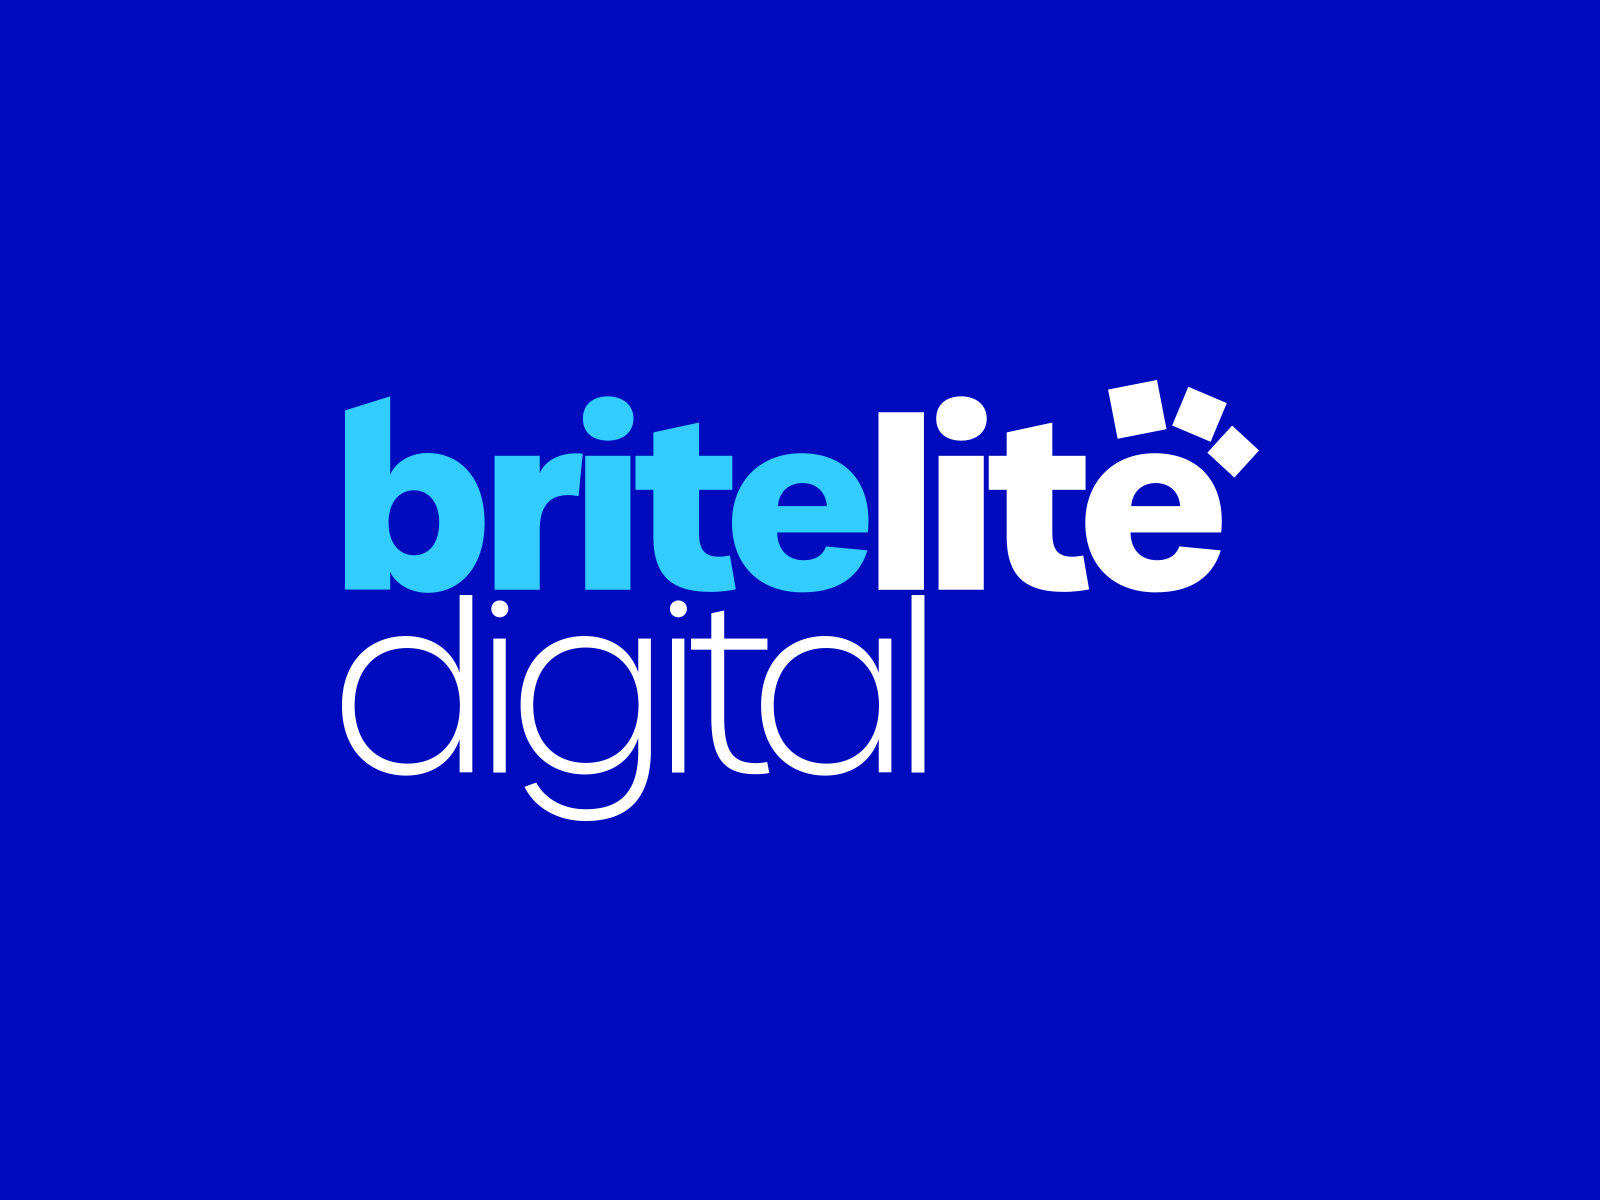 Britelite Digital Logo by Henry Carrera on Dribbble